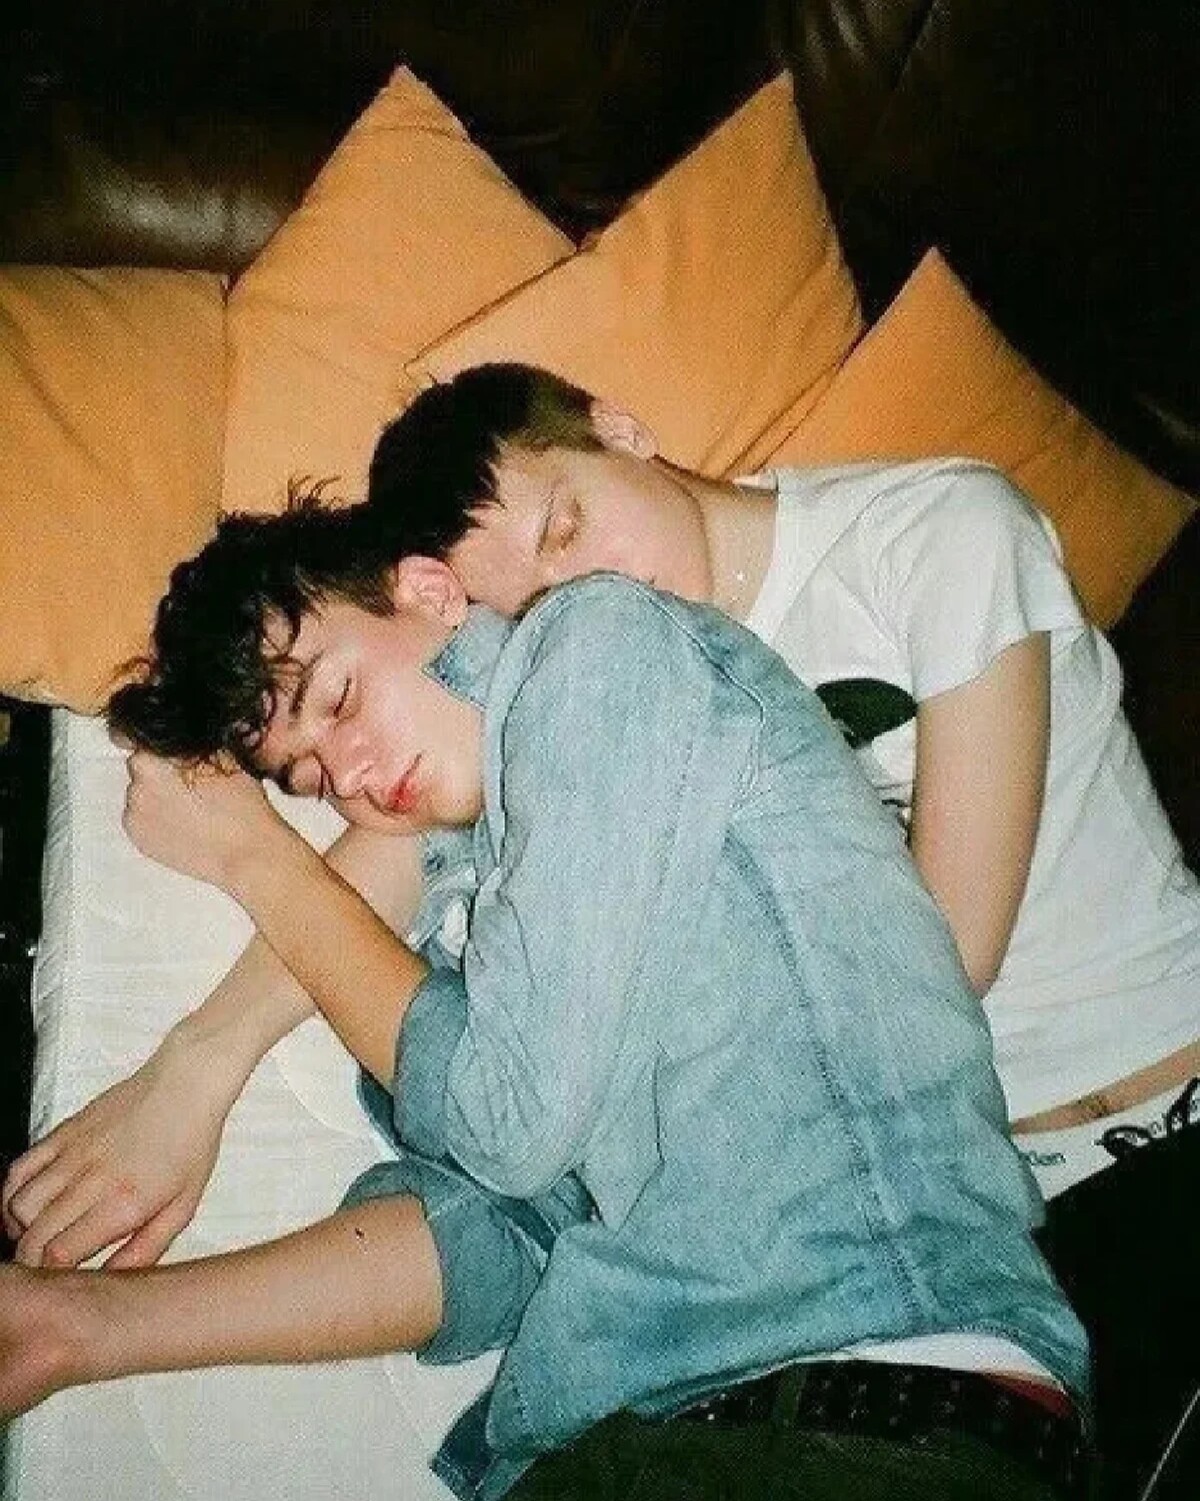 мальчики спят геи фото 2